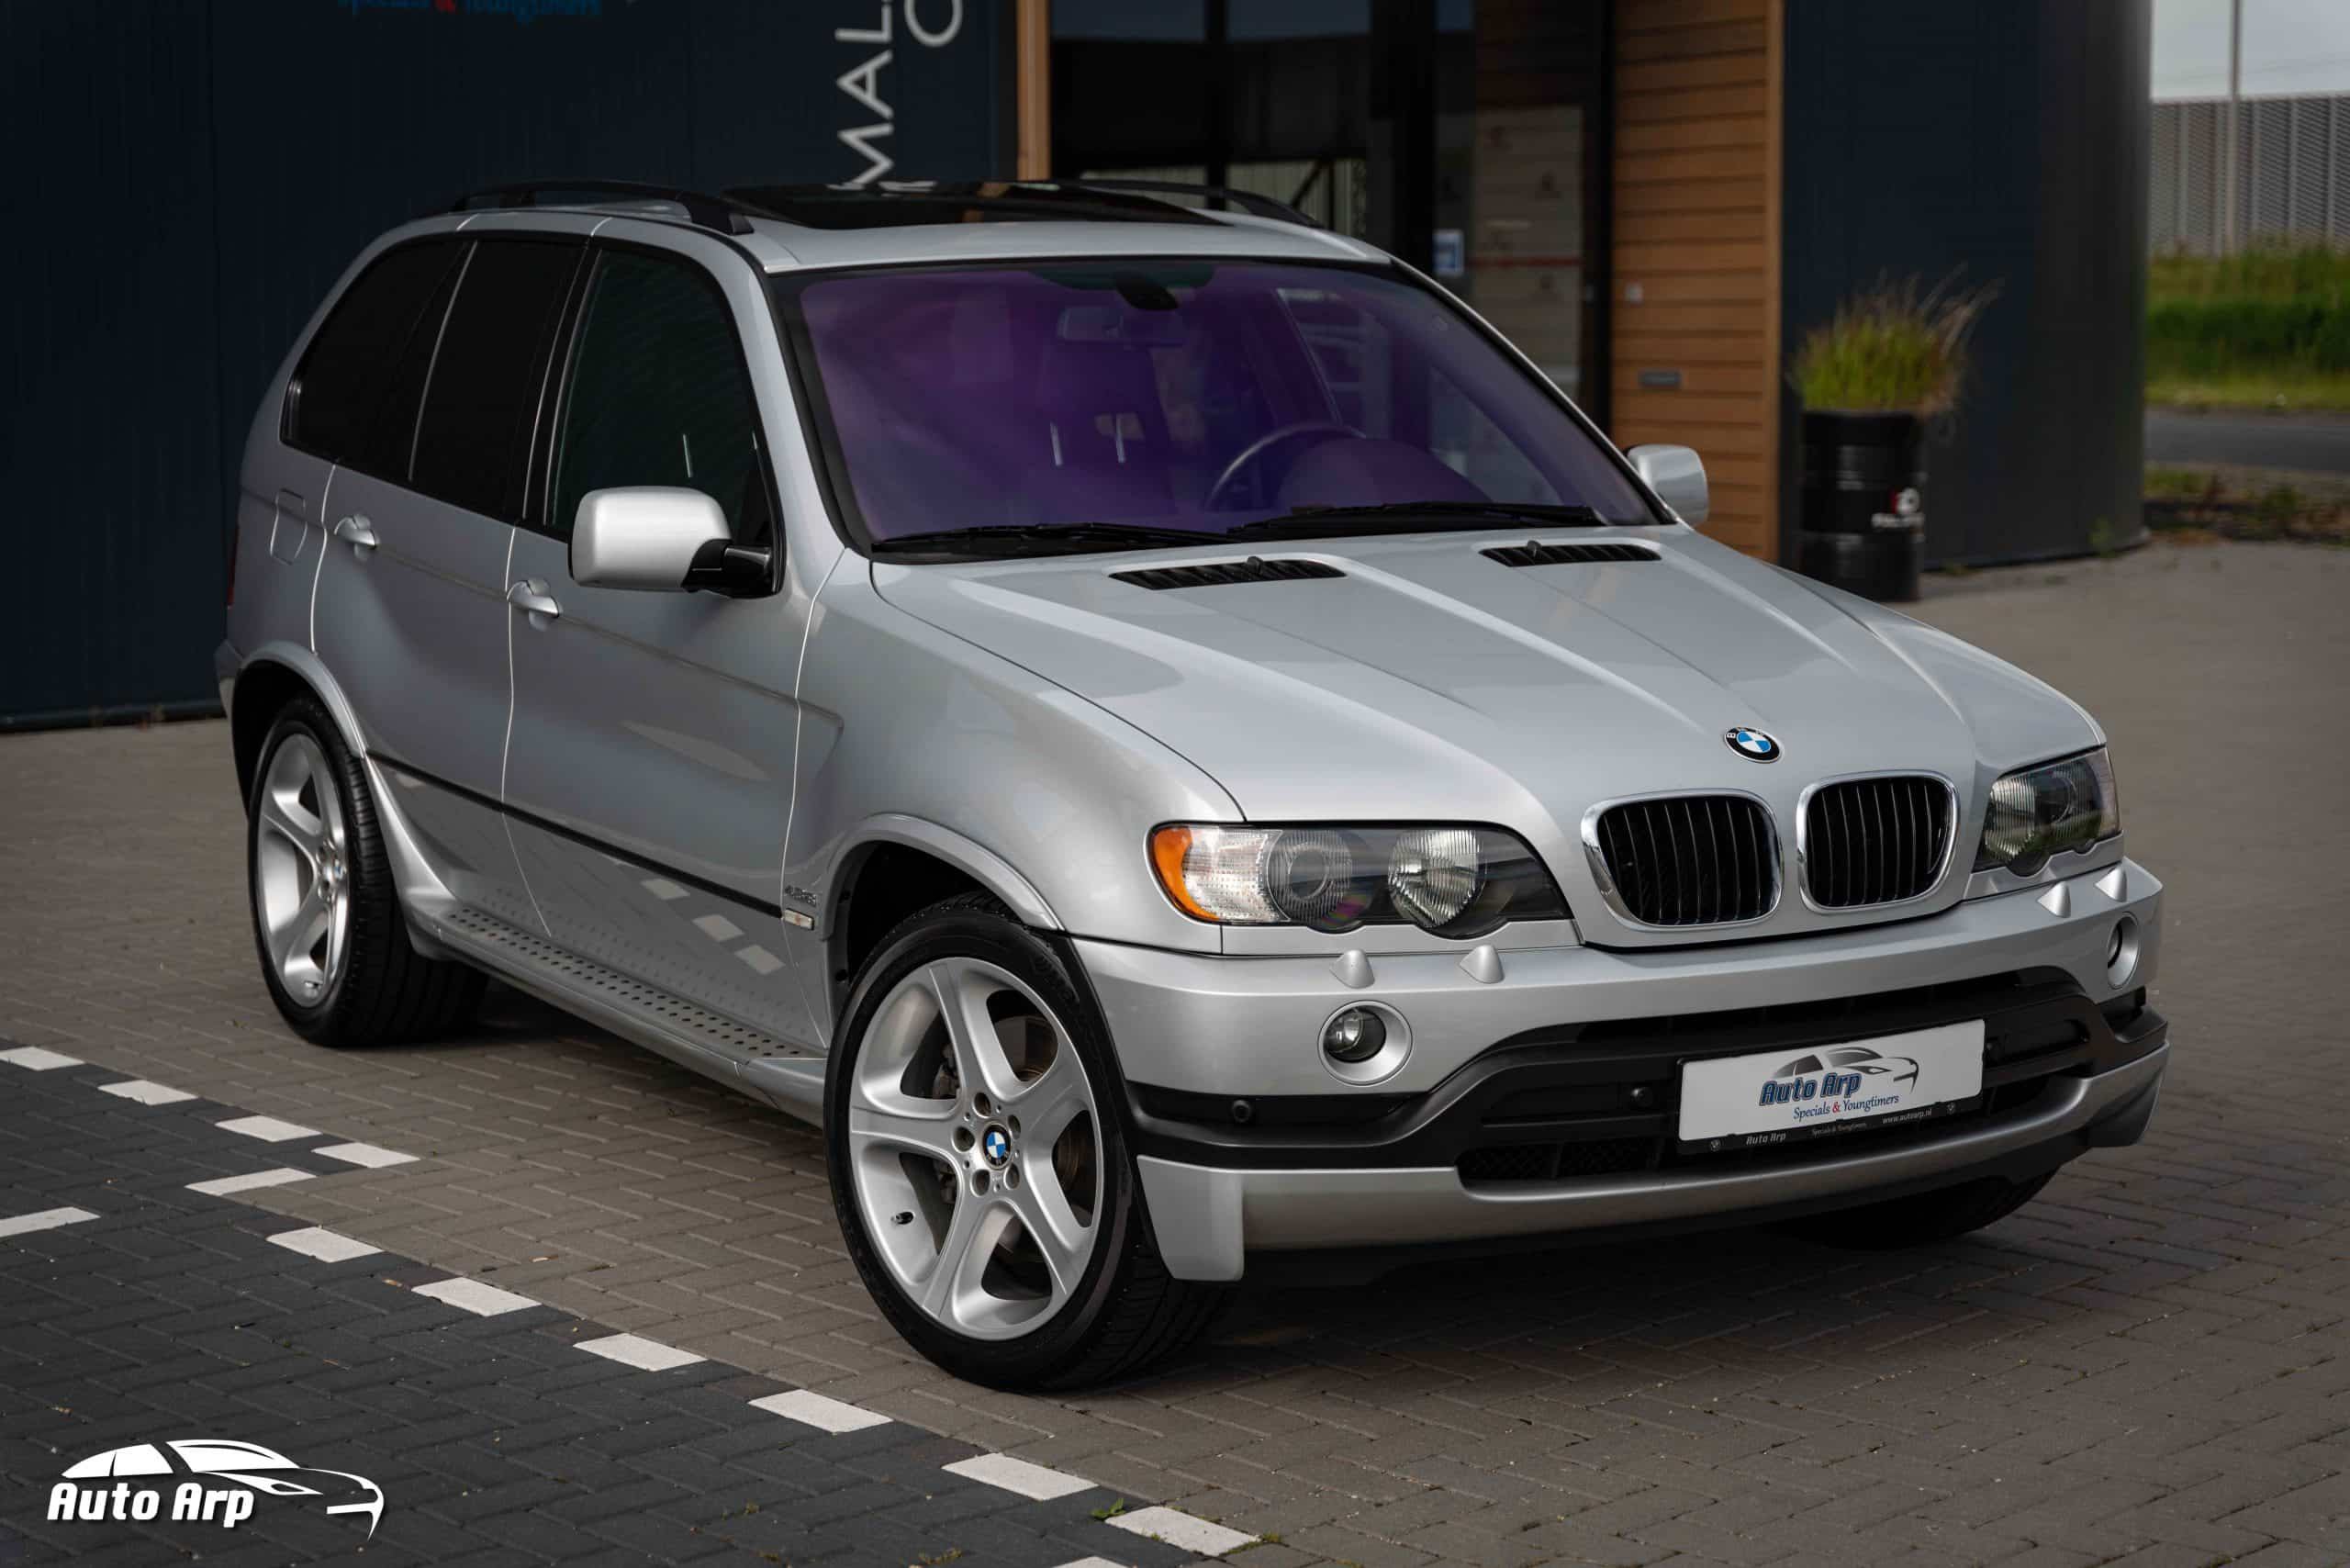 https://www.autoarp.nl/wp-content/uploads/2021/06/BMW-X5-4.6IS-2-van-36-scaled.jpg